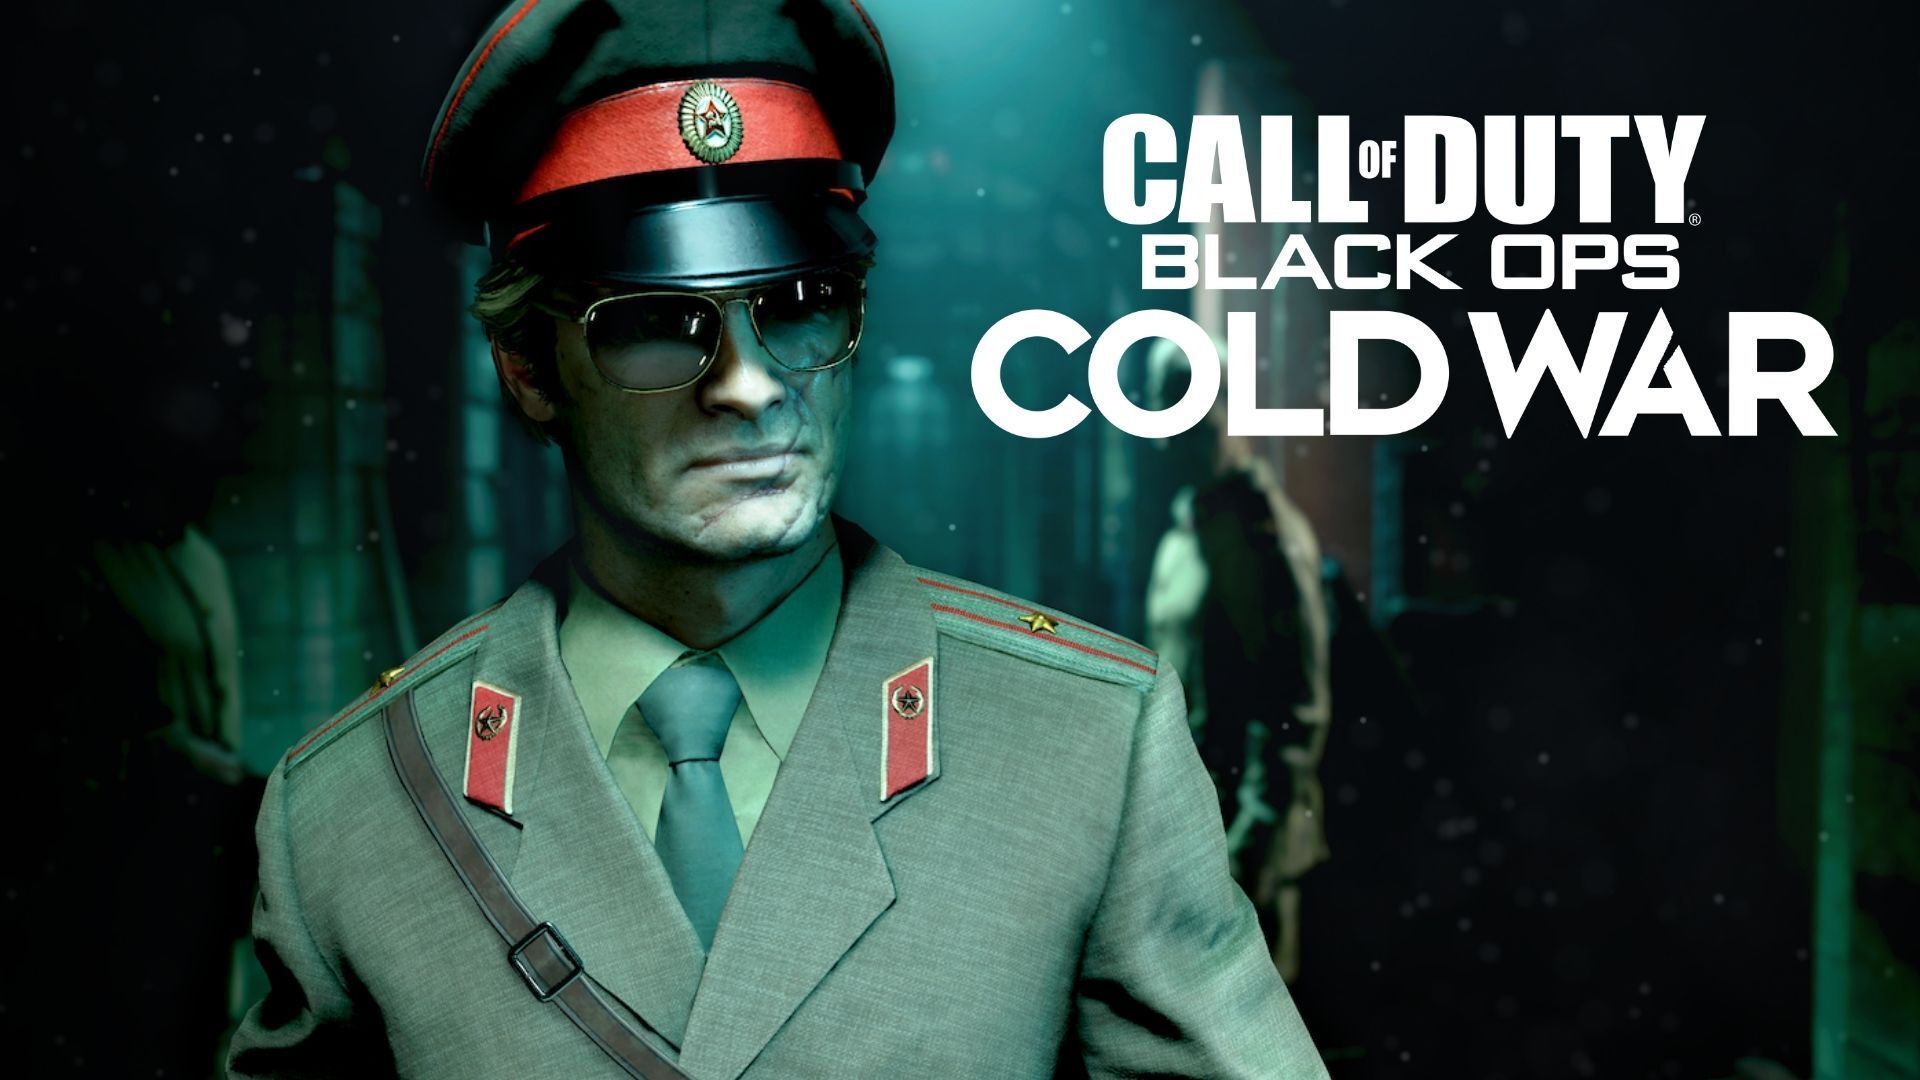 Black Ops Cold War campaign details: create